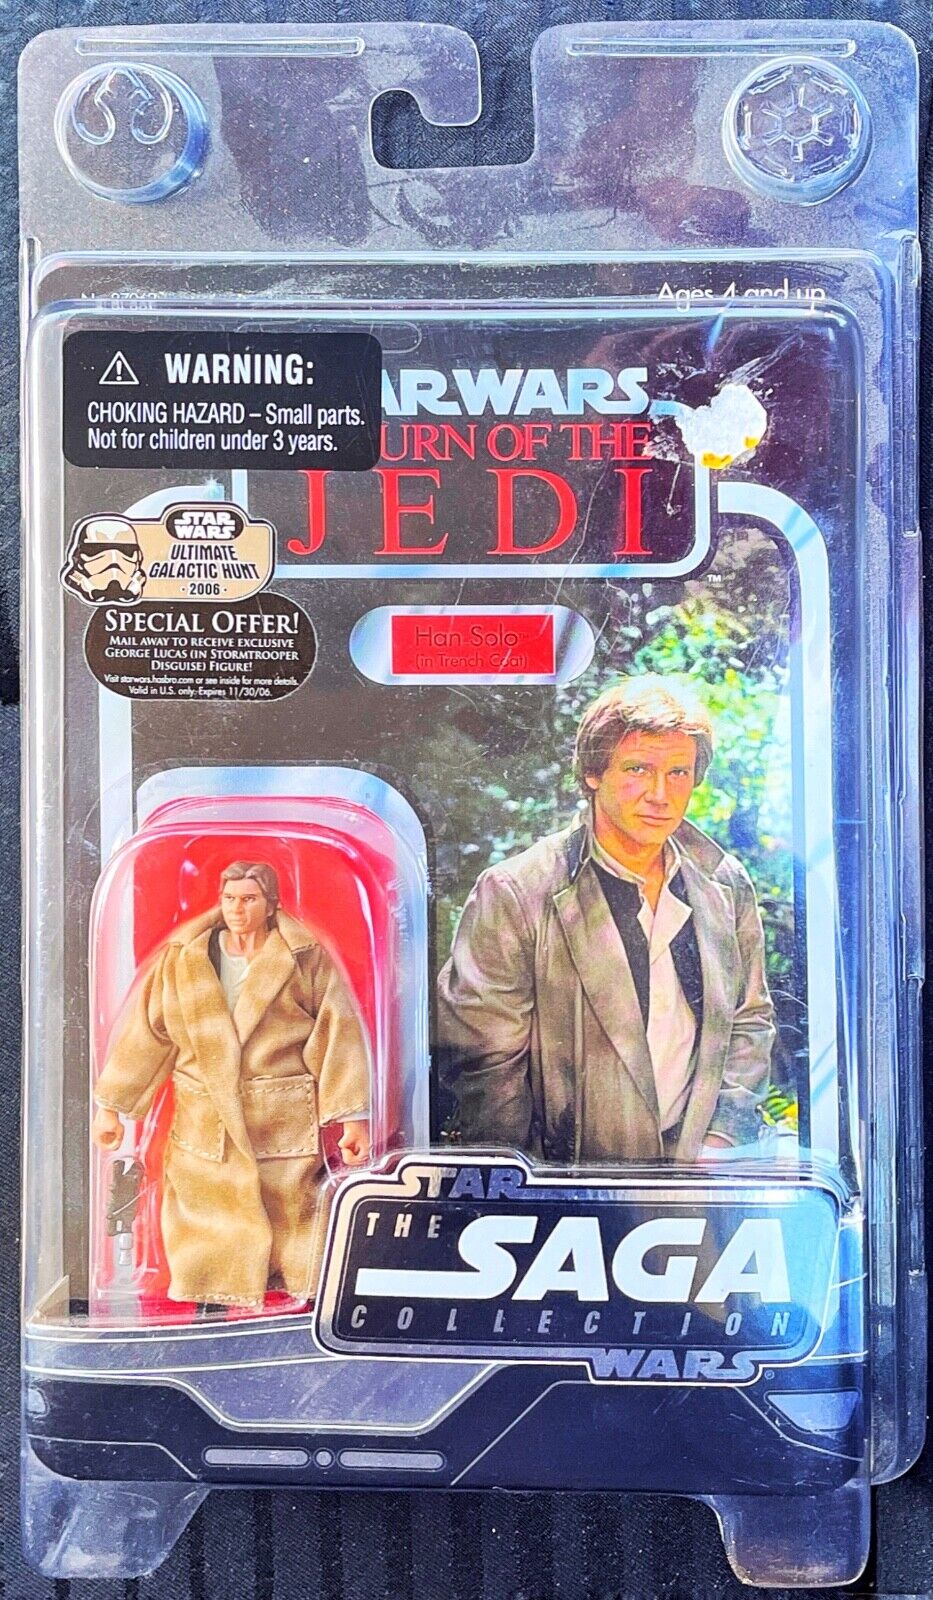 Star Wars HAN SOLO Action Figure Return of the Jedi Vtg Saga Collection 2006 New Hasbro Han Solo in Trench Coat - фотография #4